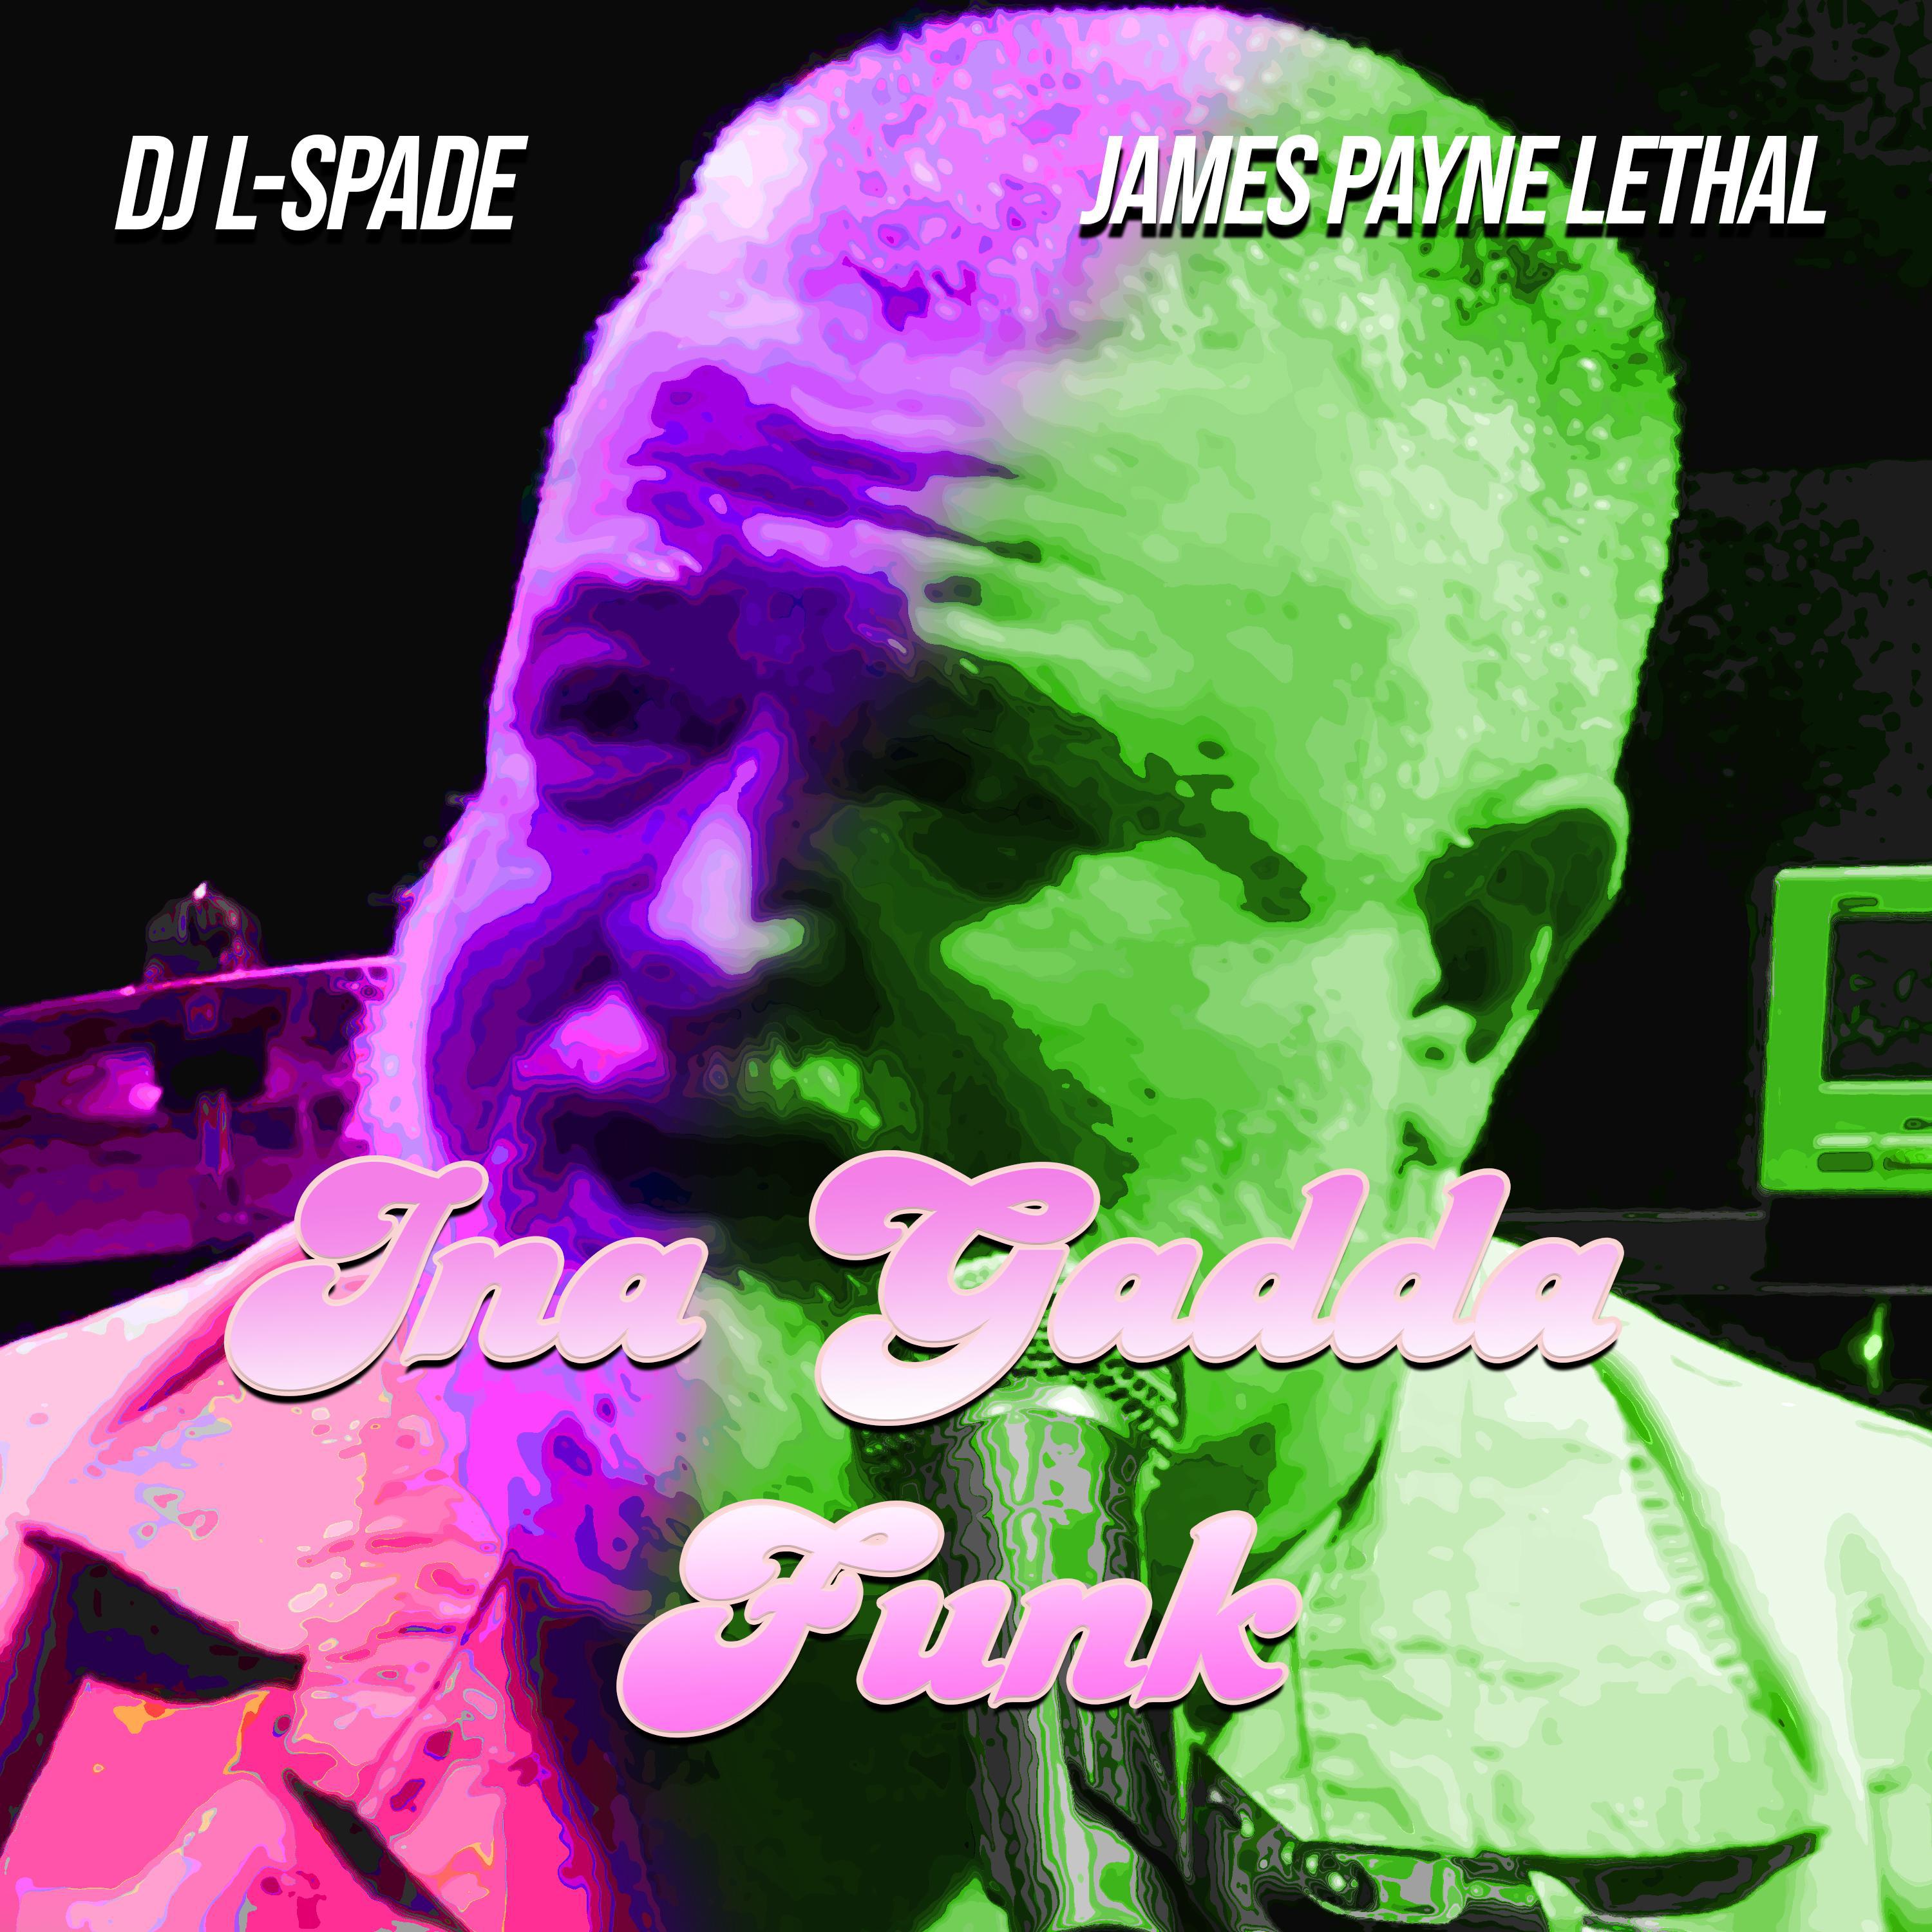 DJ L-Spade - Inna Gadda Funk (Bonus Track) (feat. James Payne Lethal & Stash Cairo)